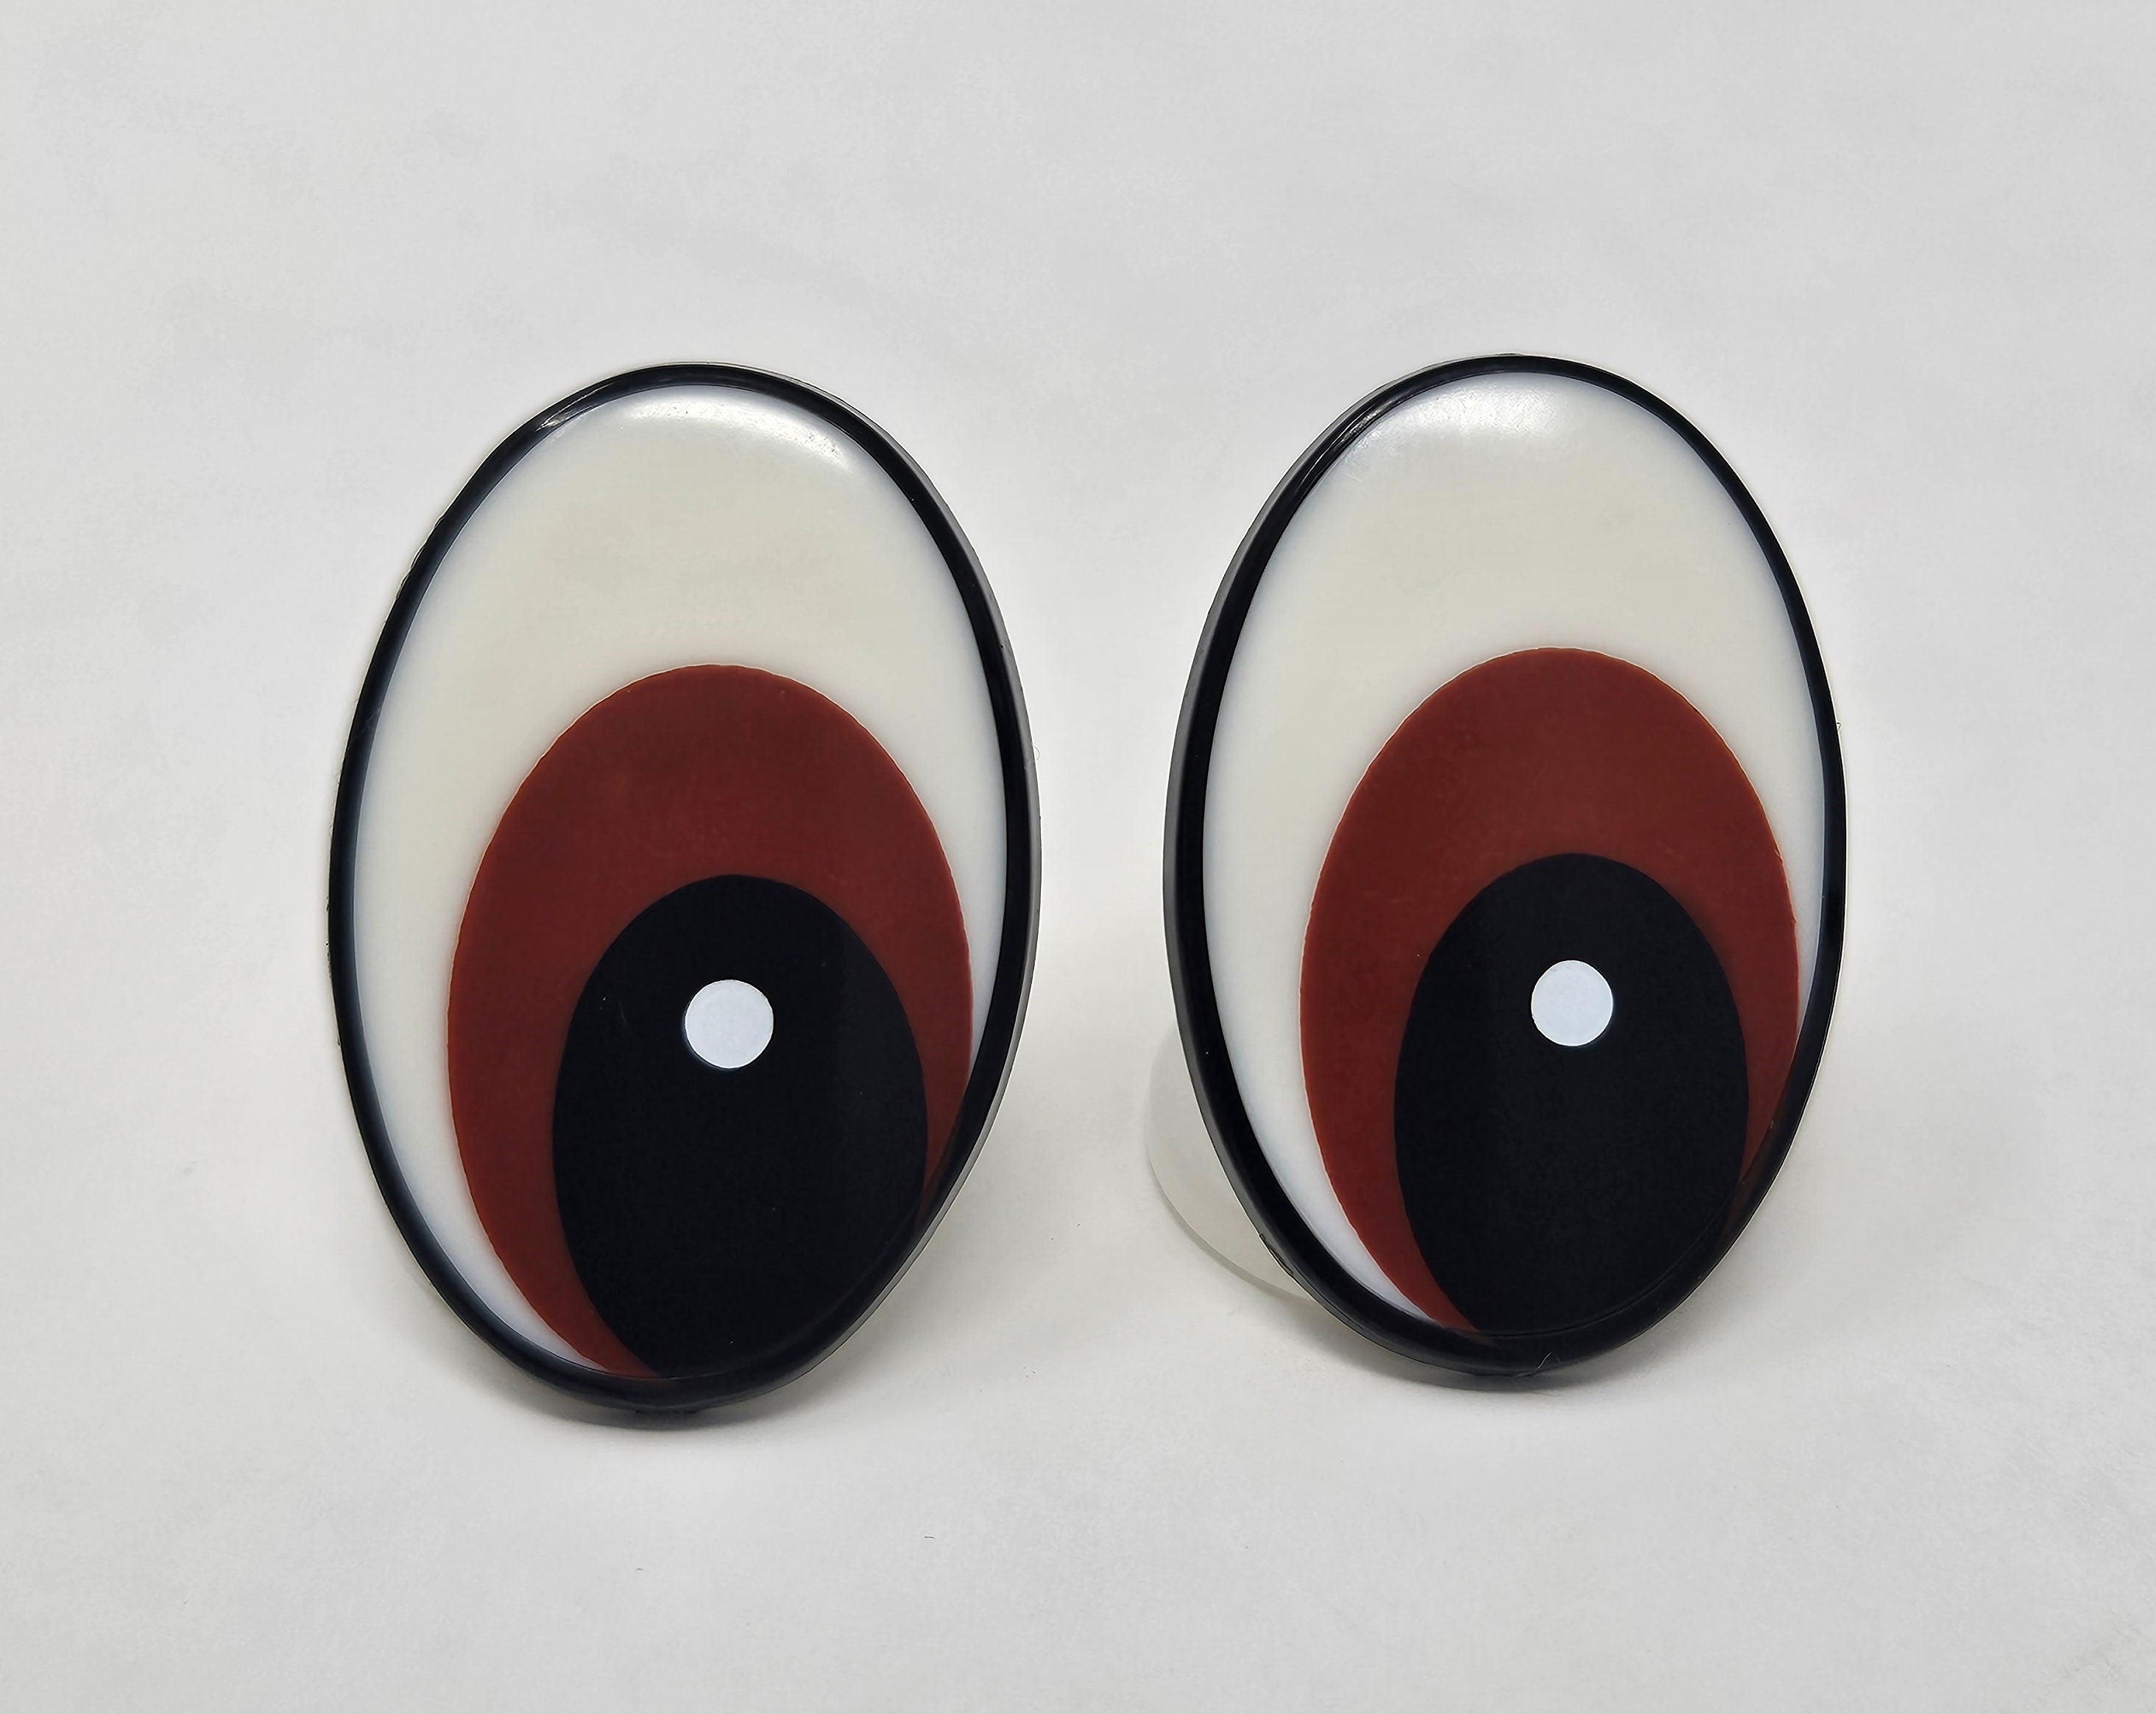 18mm X 13mm Safety Eyes 1 Pair Amigurumi Safety Eyes Plastic Oval